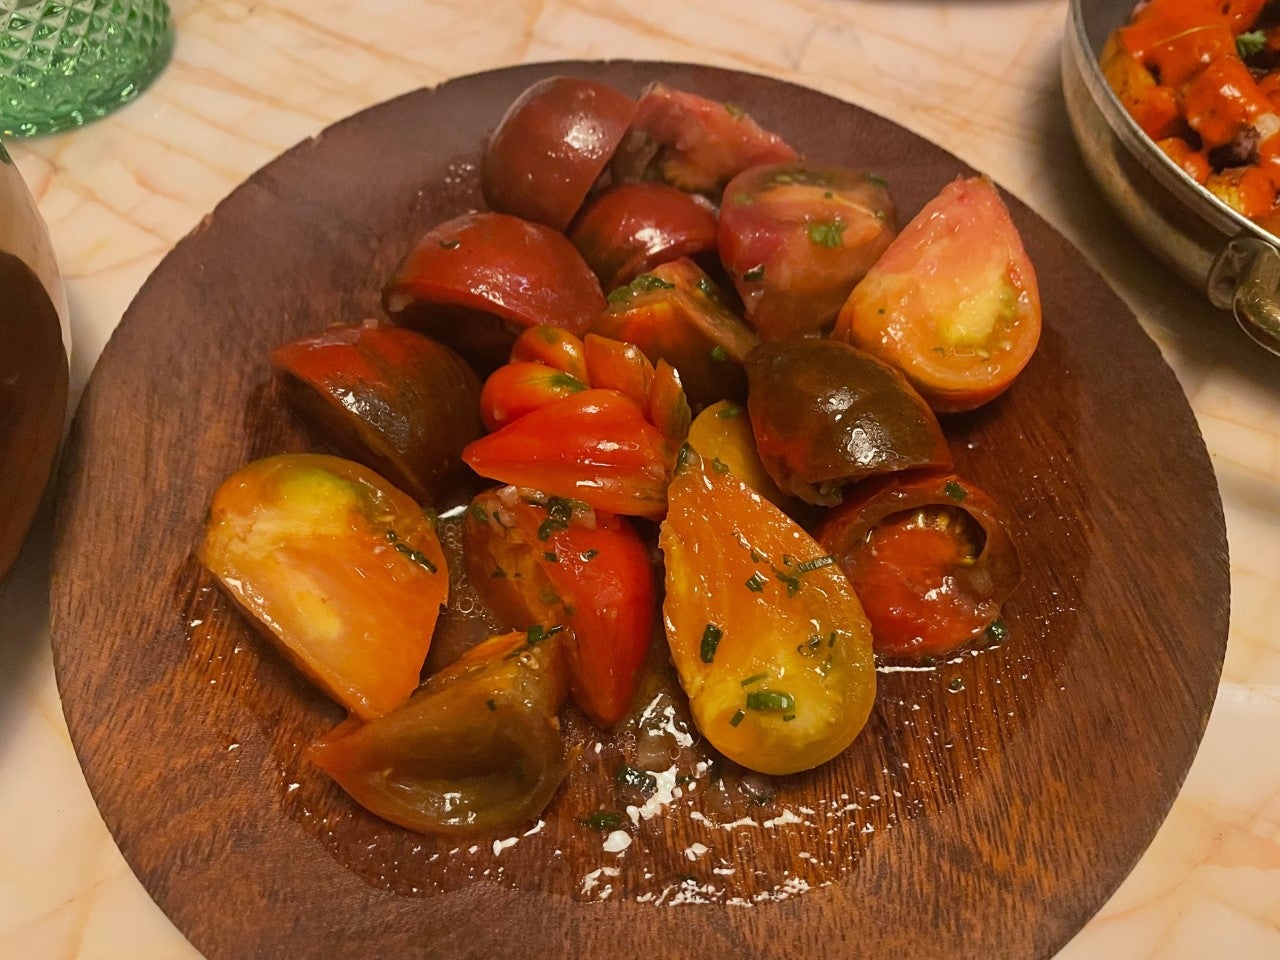 Fresh tomato salad with a sweet vinaigrette